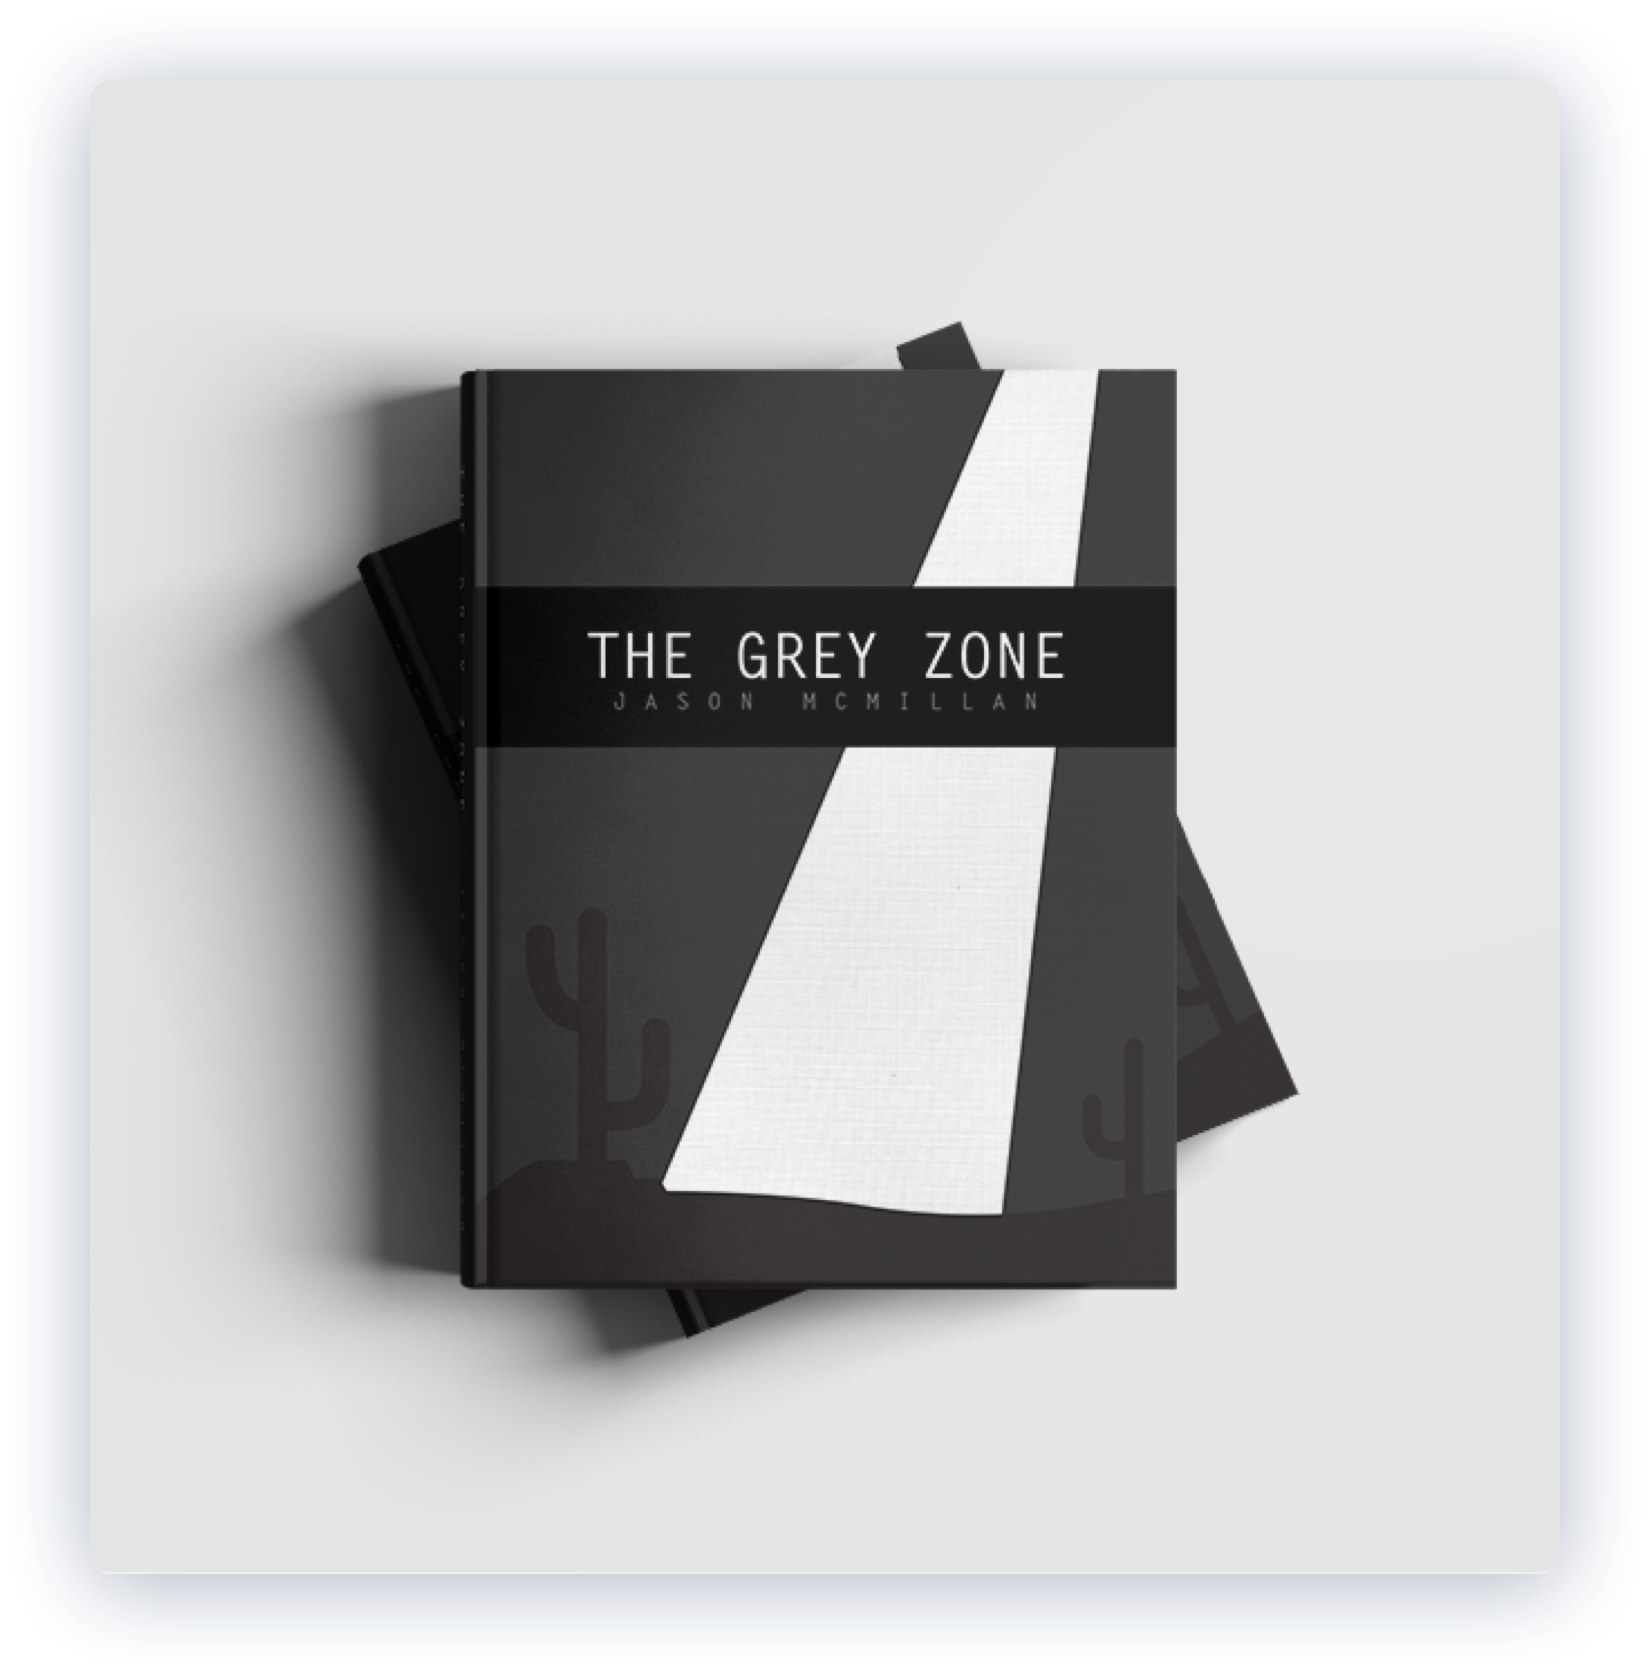 The Grey Zone by Jason McMillan